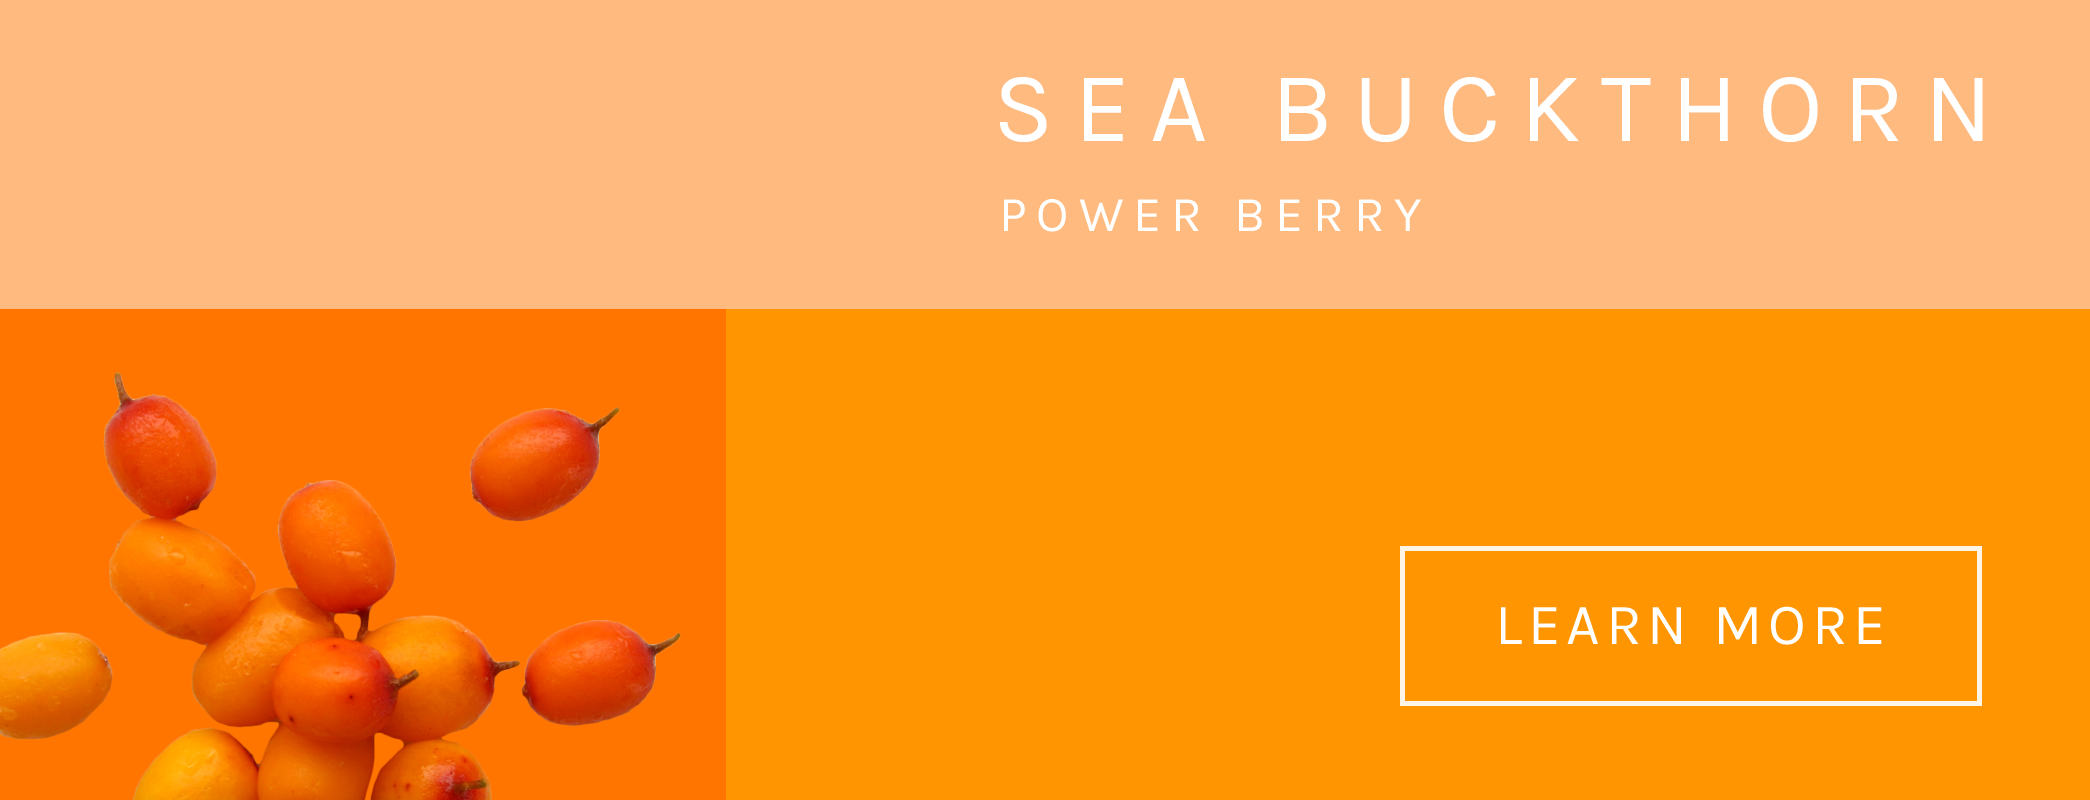 Swell Skin Sea Buckthorn Information - Learn More